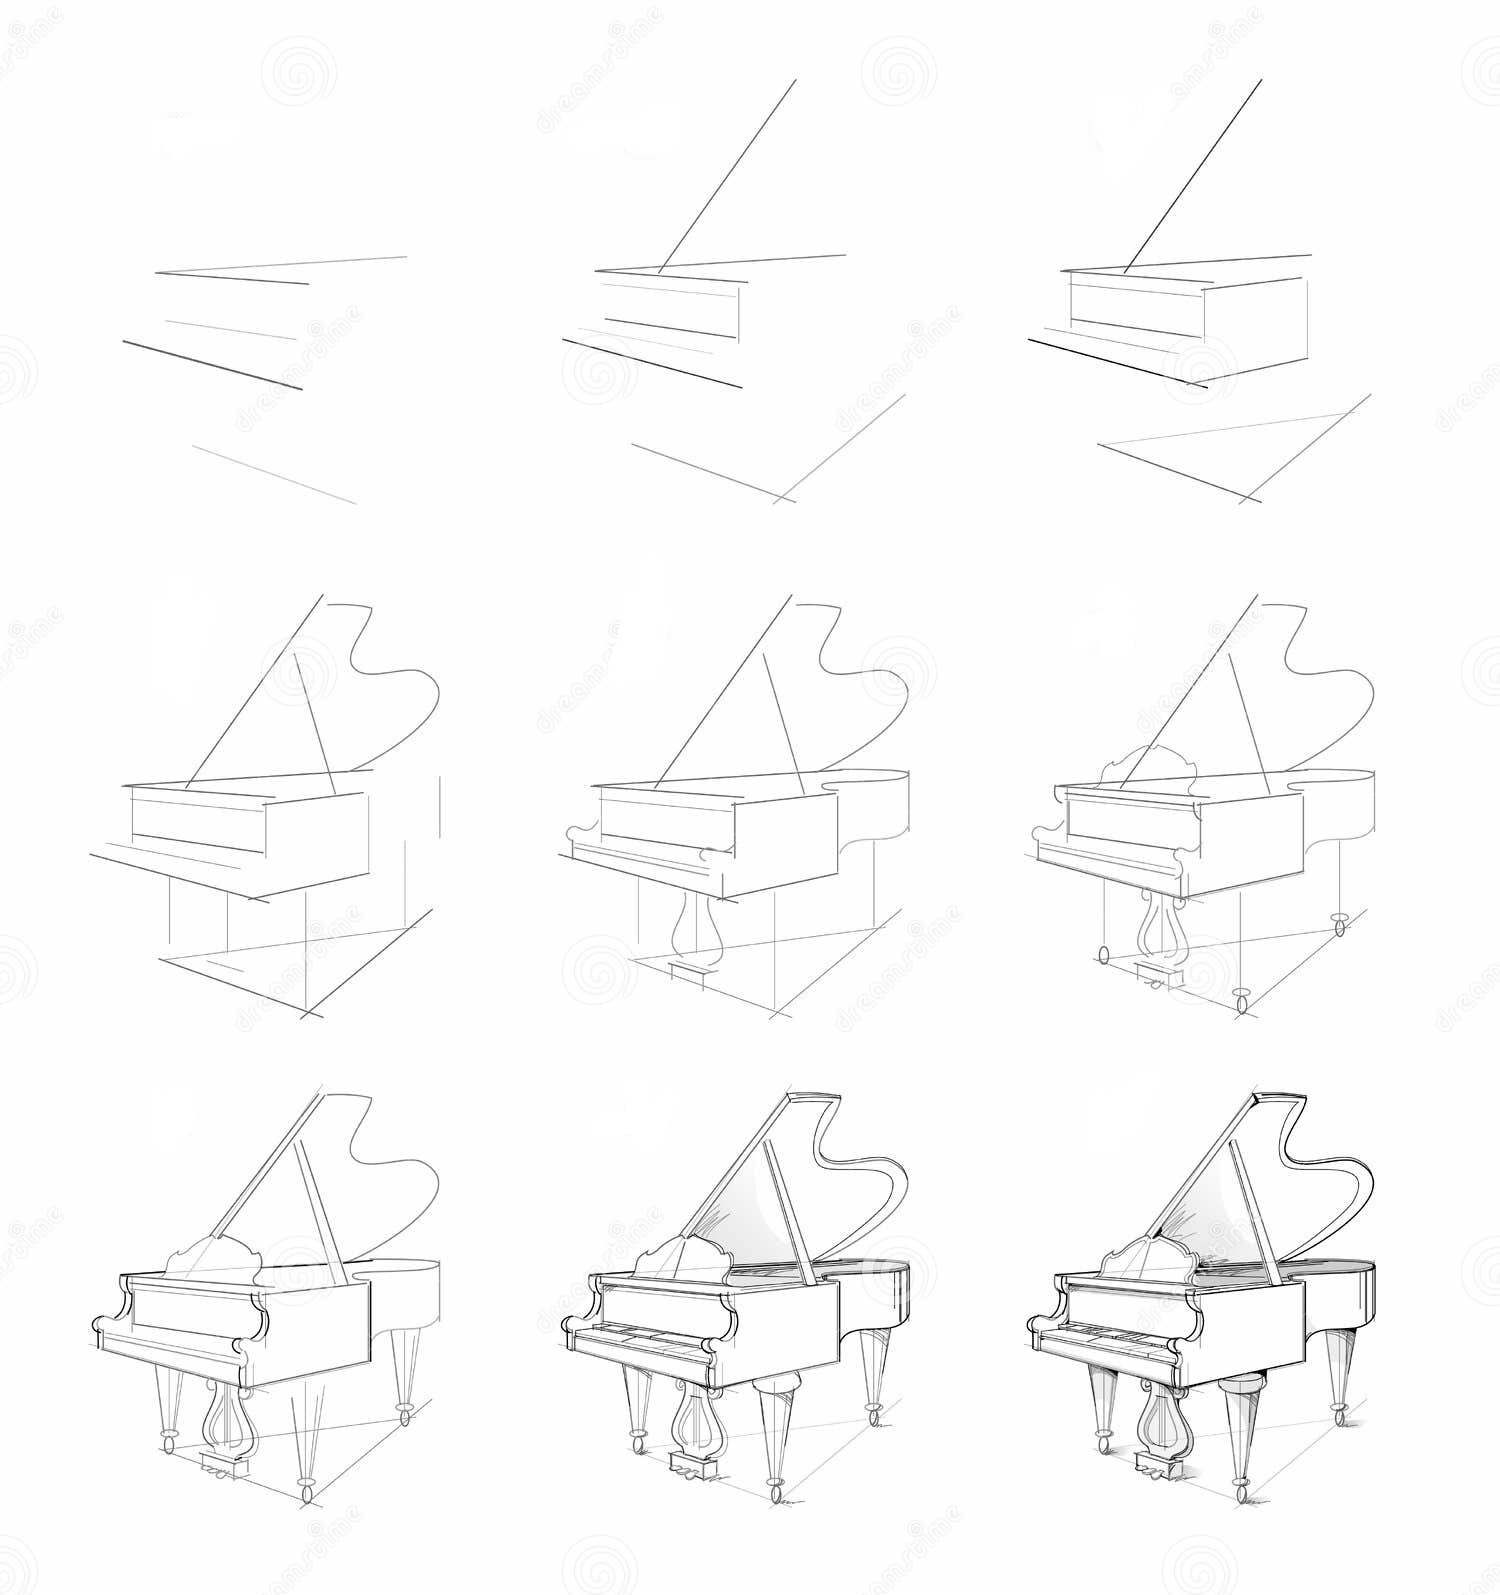 Piano idea (4) piirustus